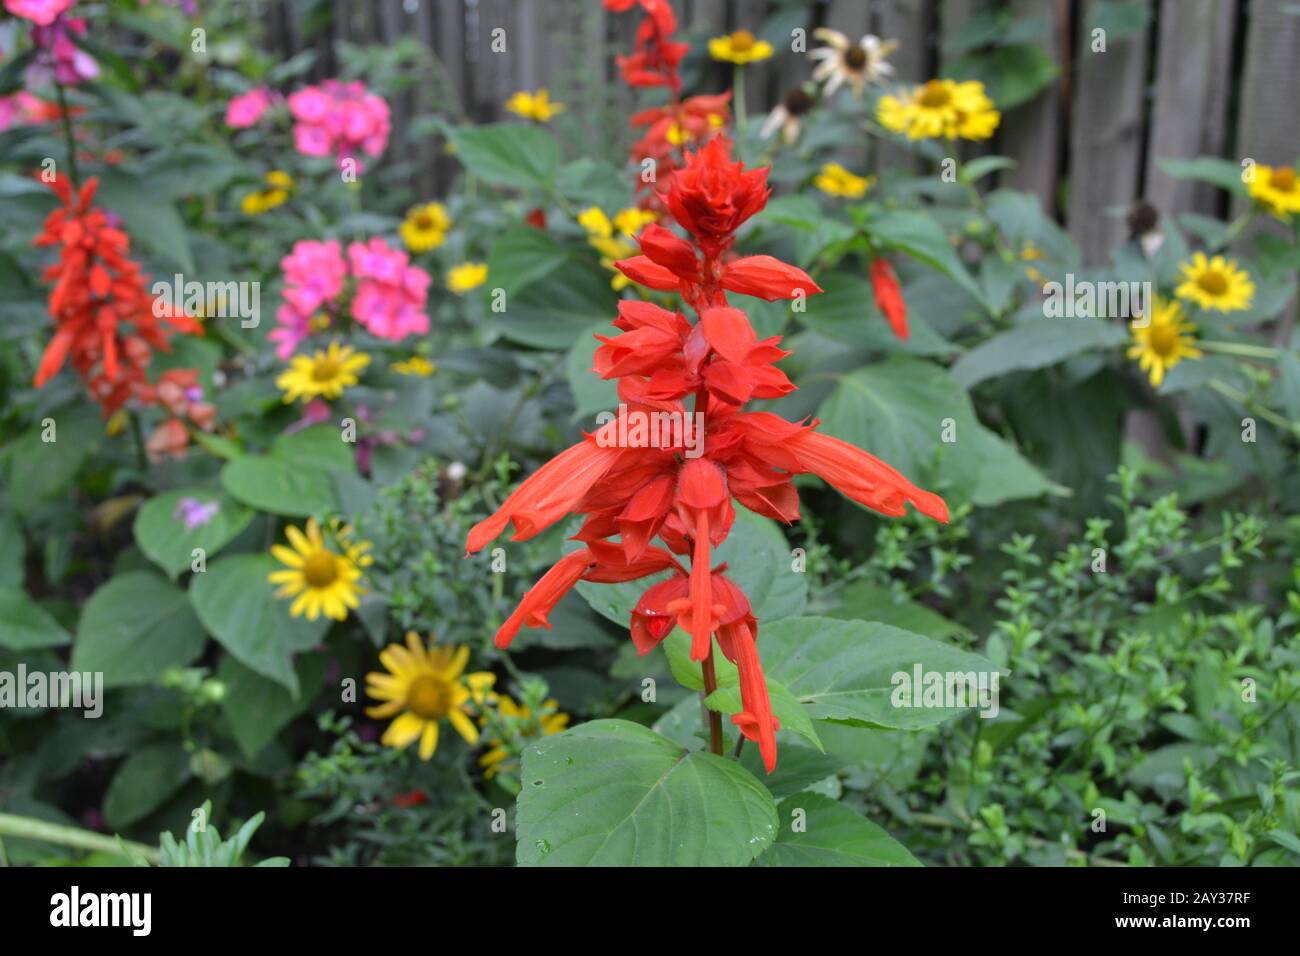 Salvia. Salvia splendens. Flower red. Heat-loving plants. Annual plant. Beautiful flower. Garden. Flowerbed. Growing flowers. Close-up. Horizontal Stock Photo